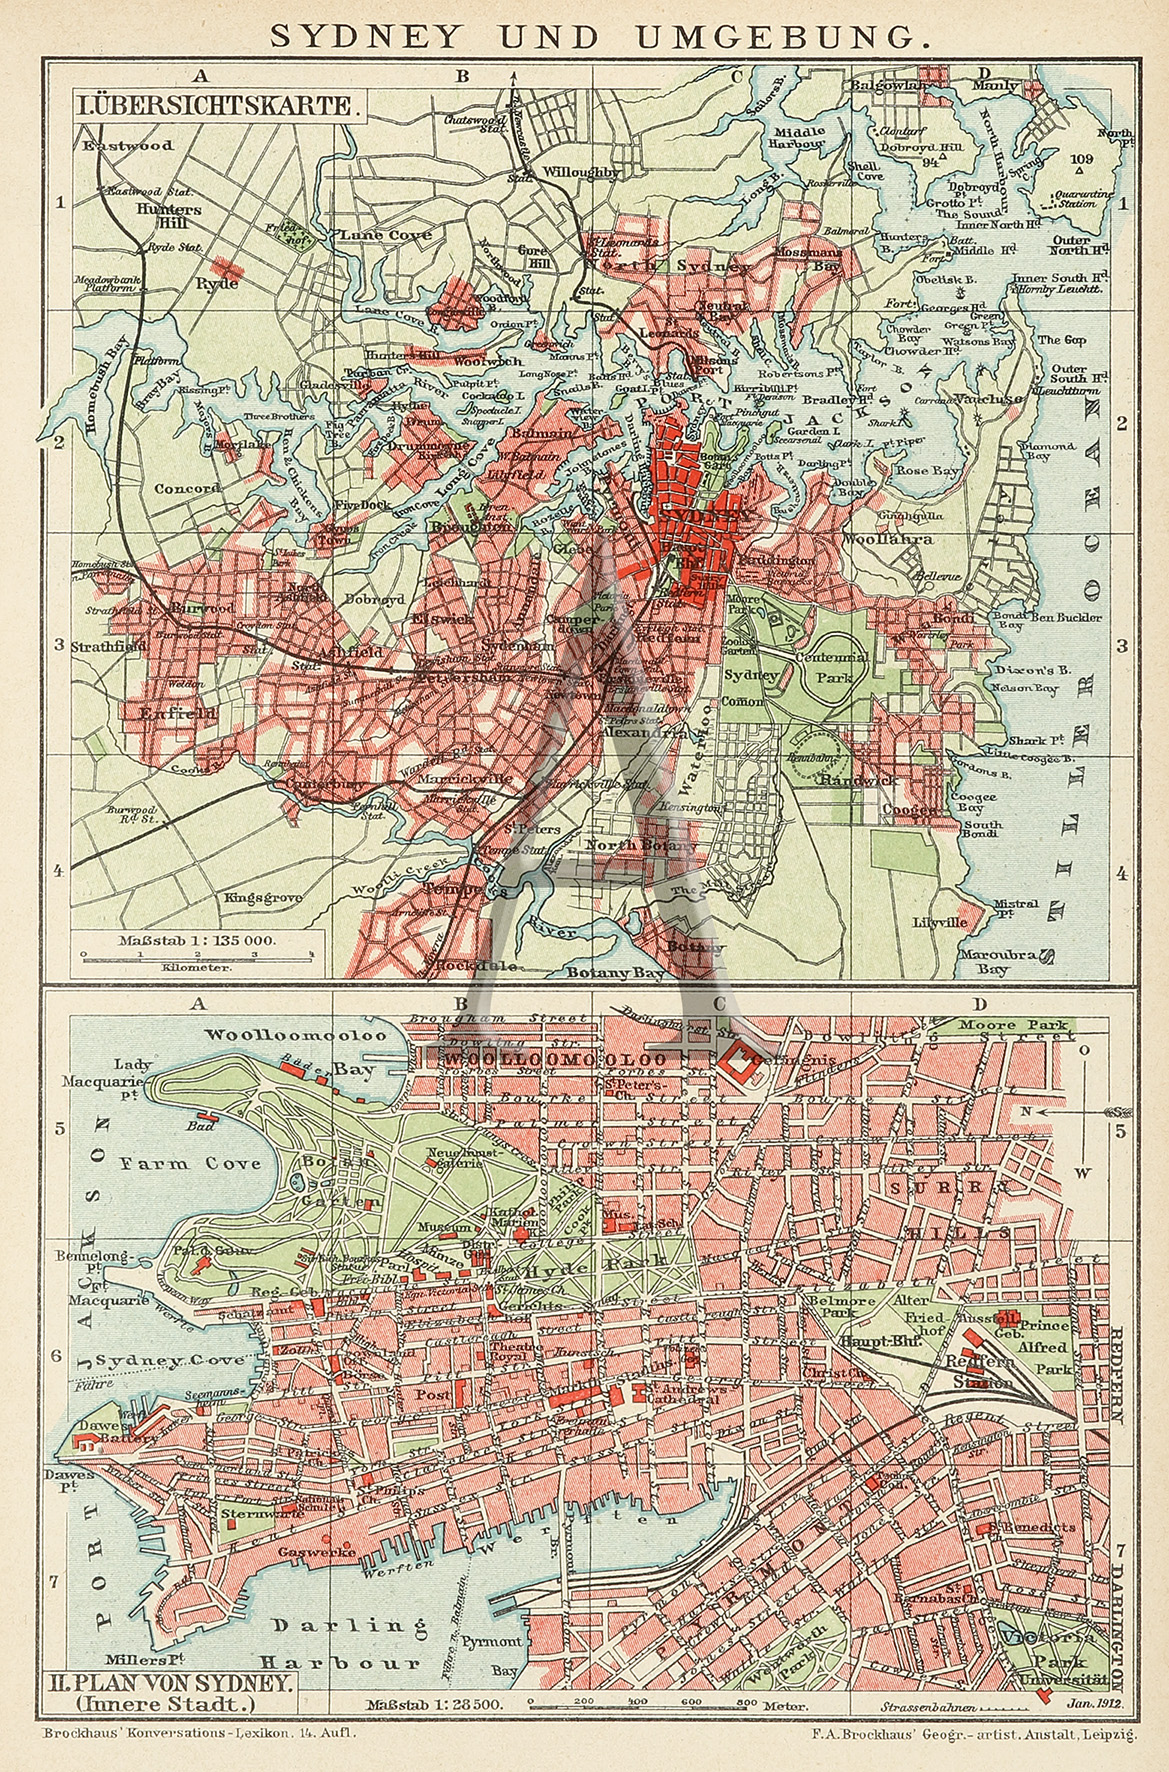 Sydney Und Umgebung. - Antique Map from 1899